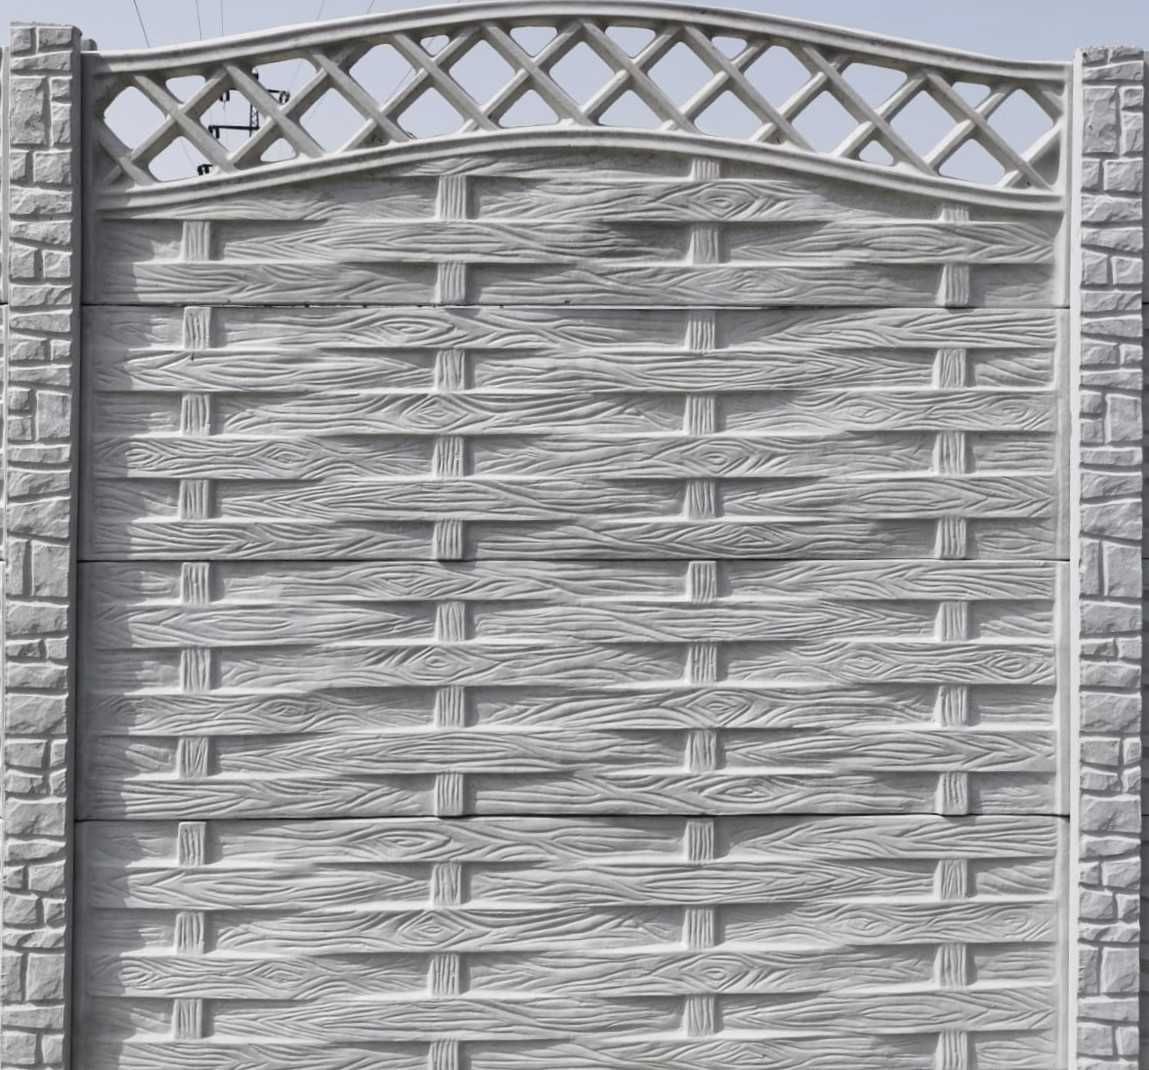 Gard Din Beton Armat - Solid, Durabil și Elegant